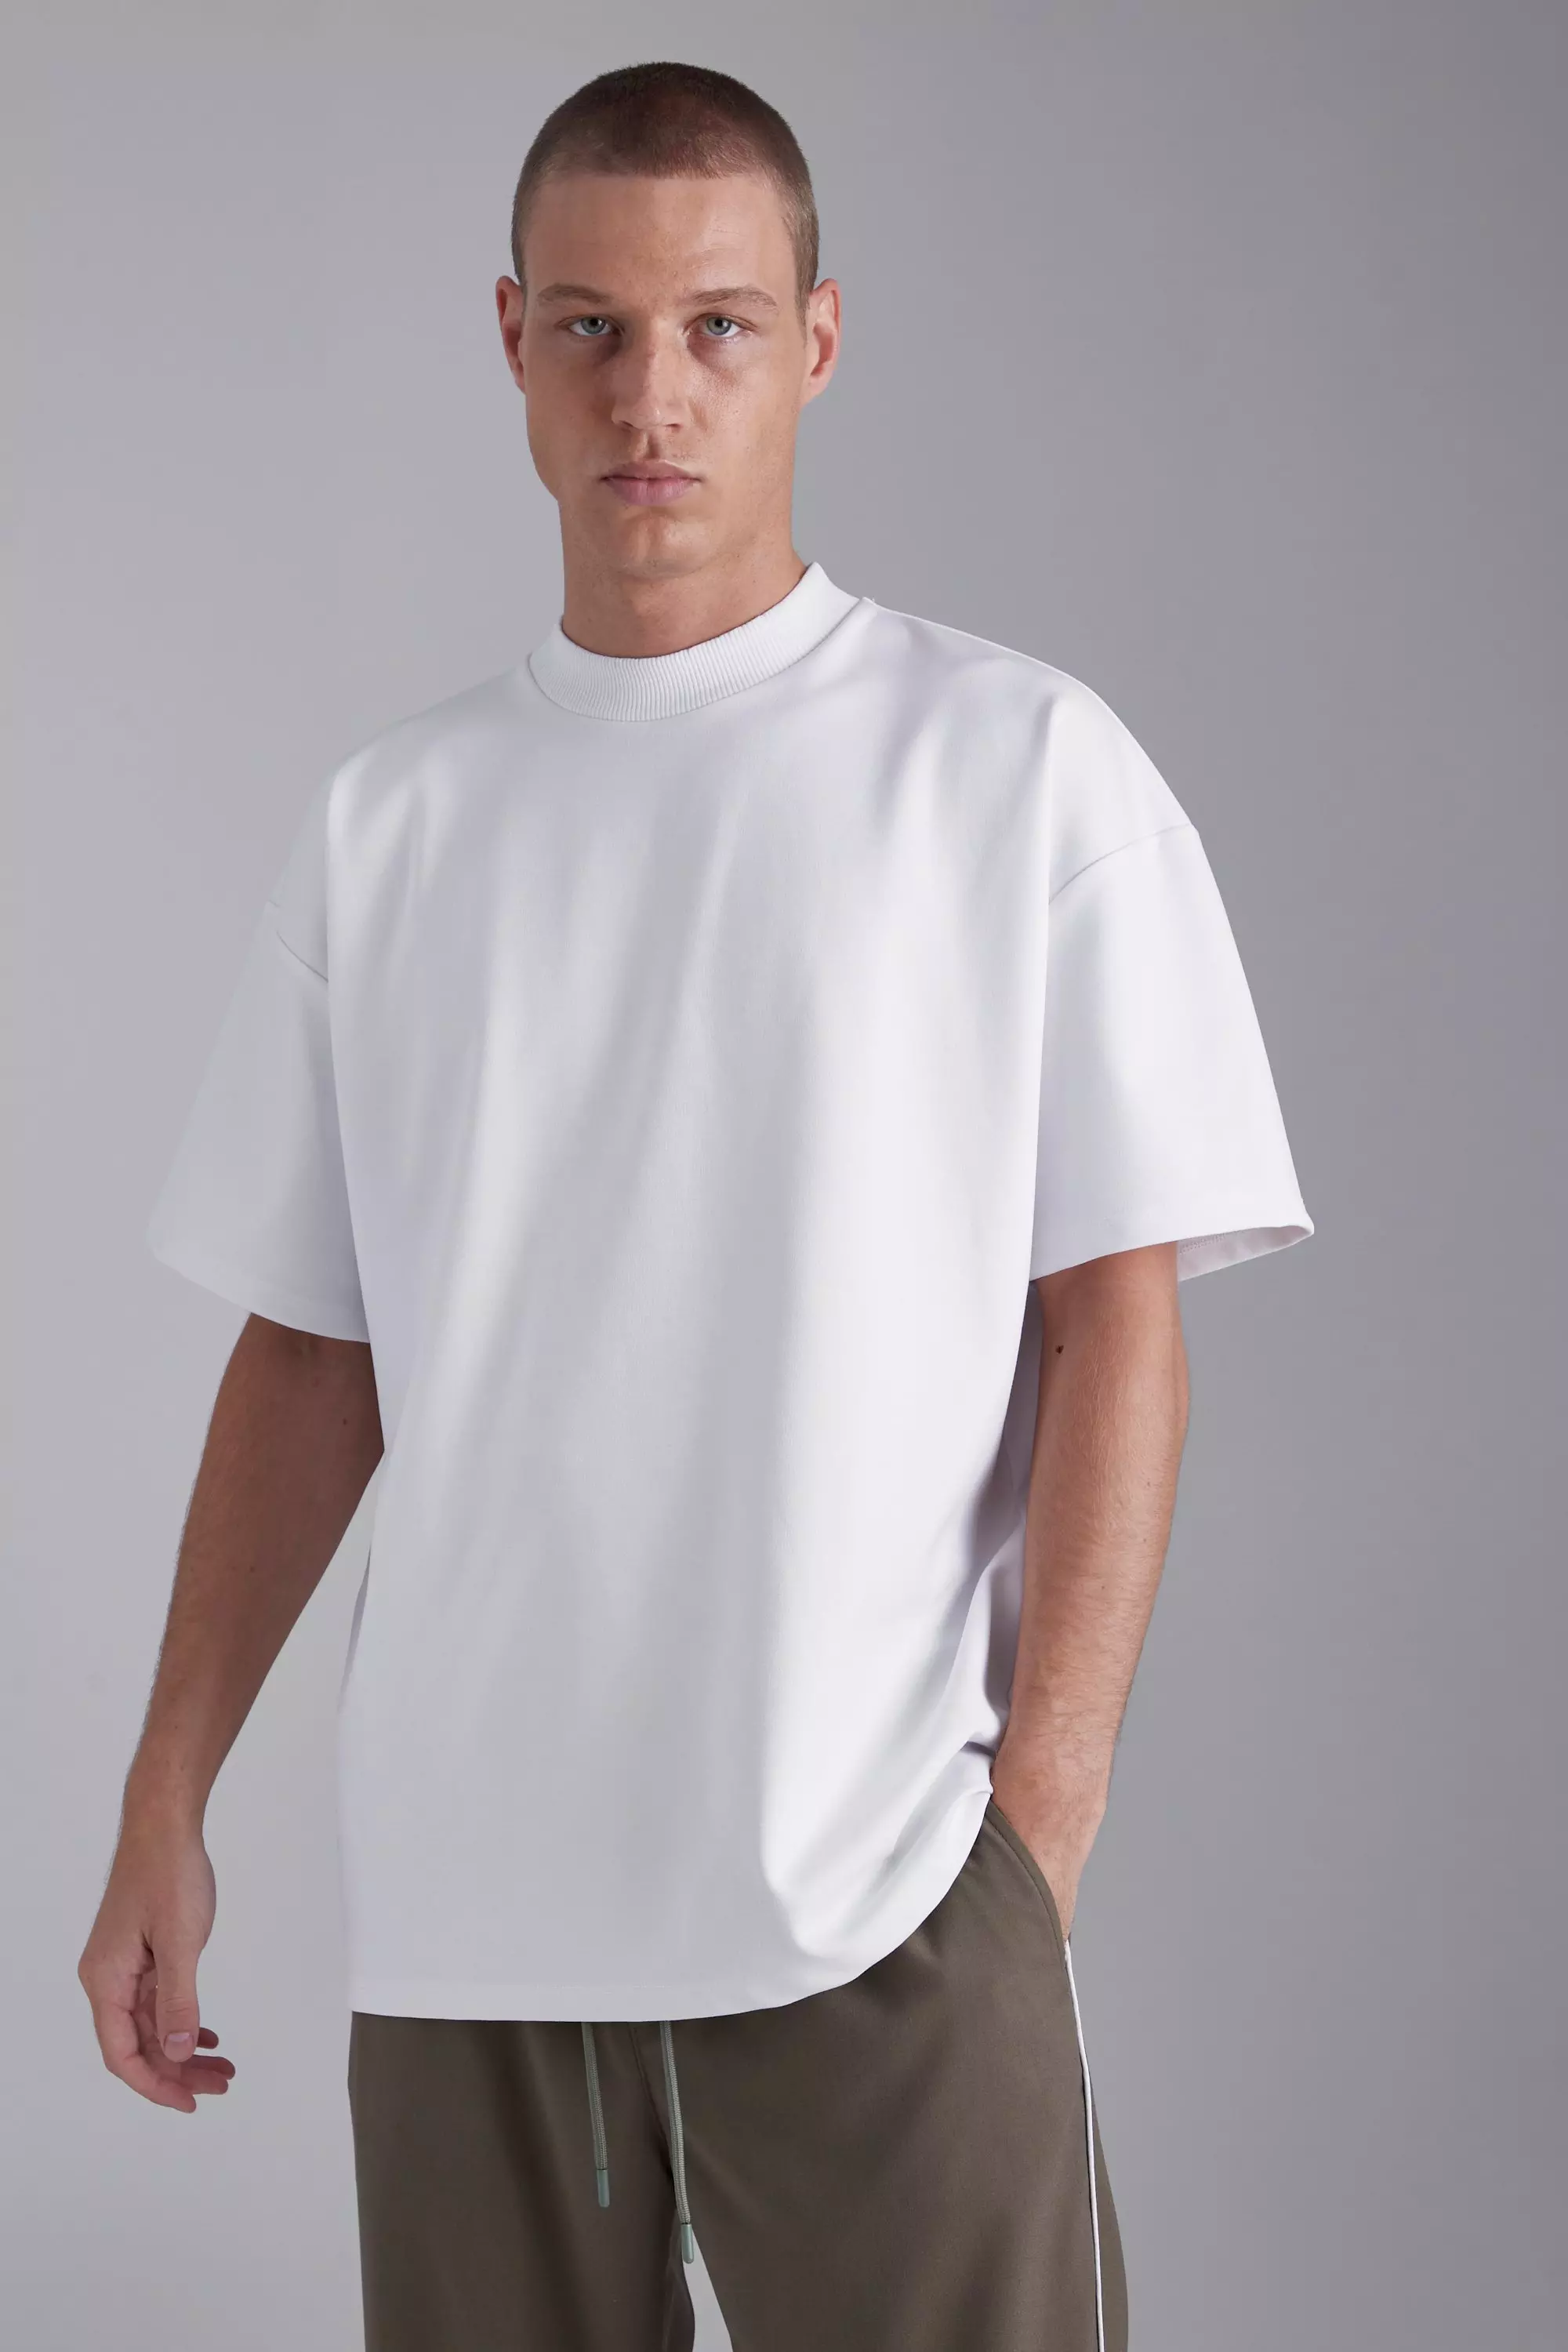 White Plain Oversized T-Shirt